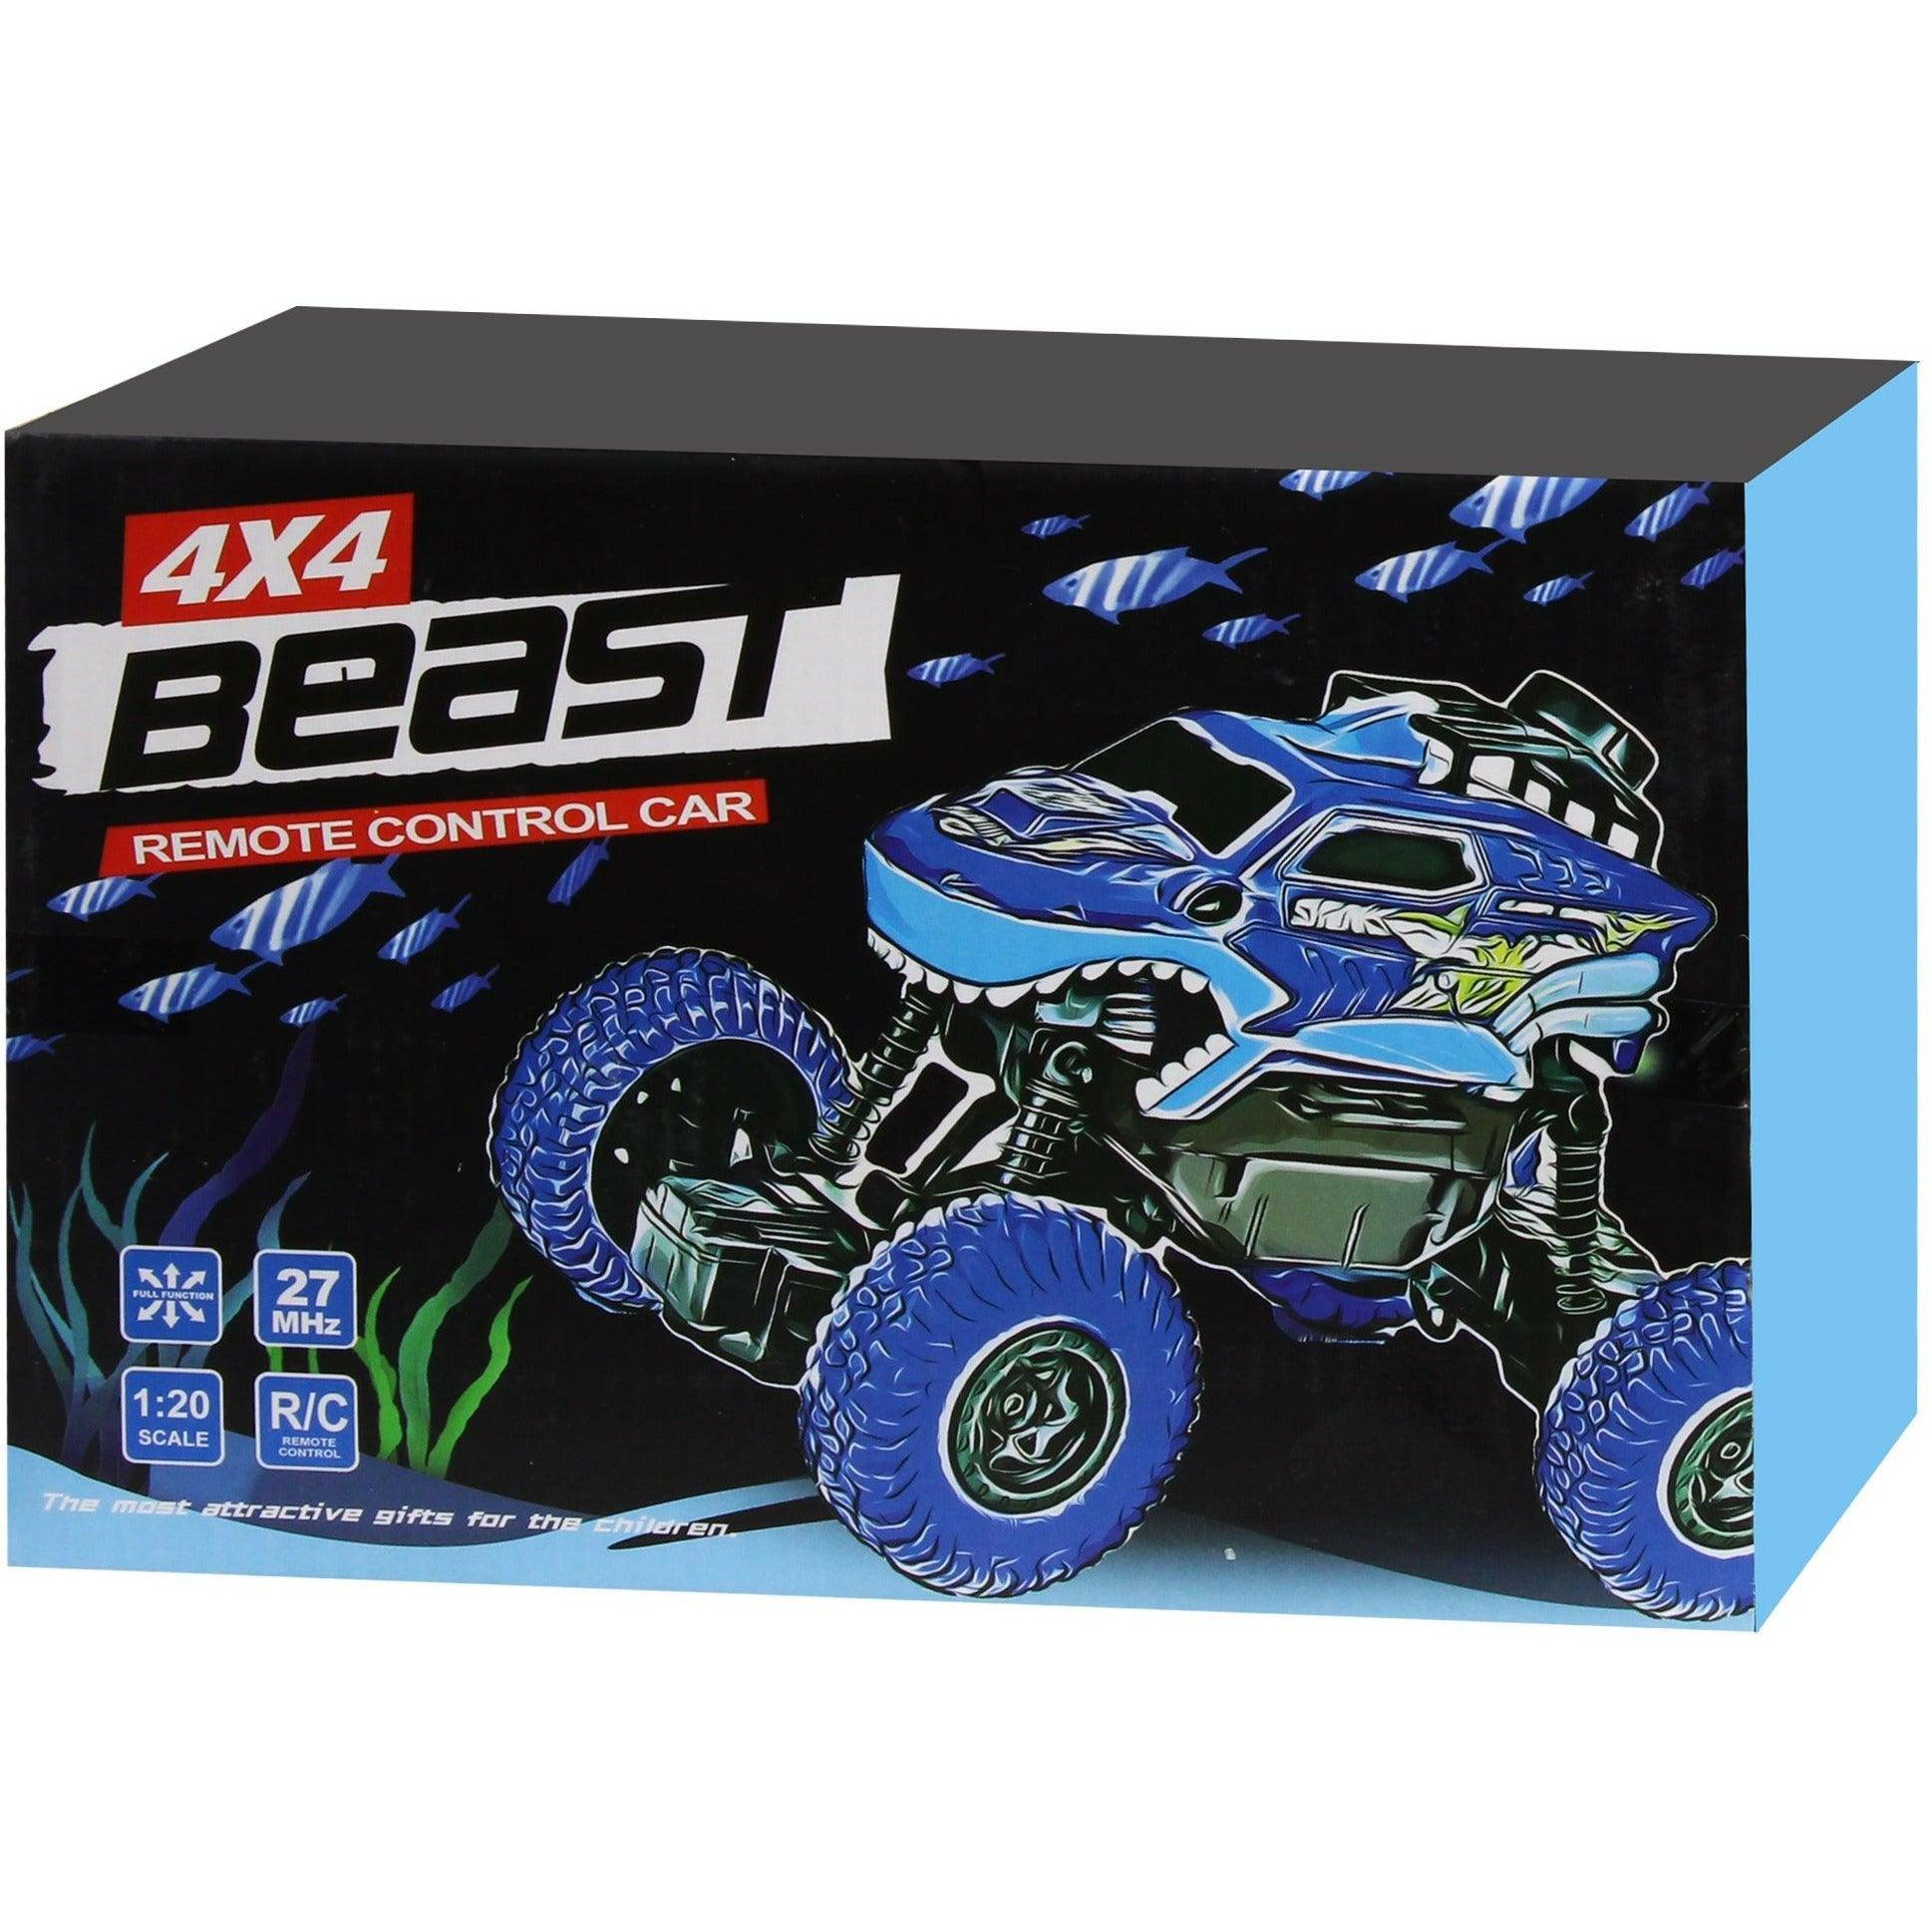 4x4 Beast Car 27MHZ Remote Control Car 1:20 Scale - BumbleToys - 6+ Years, 8-13 Years, Boys, Cars, Remote Control, Toy House